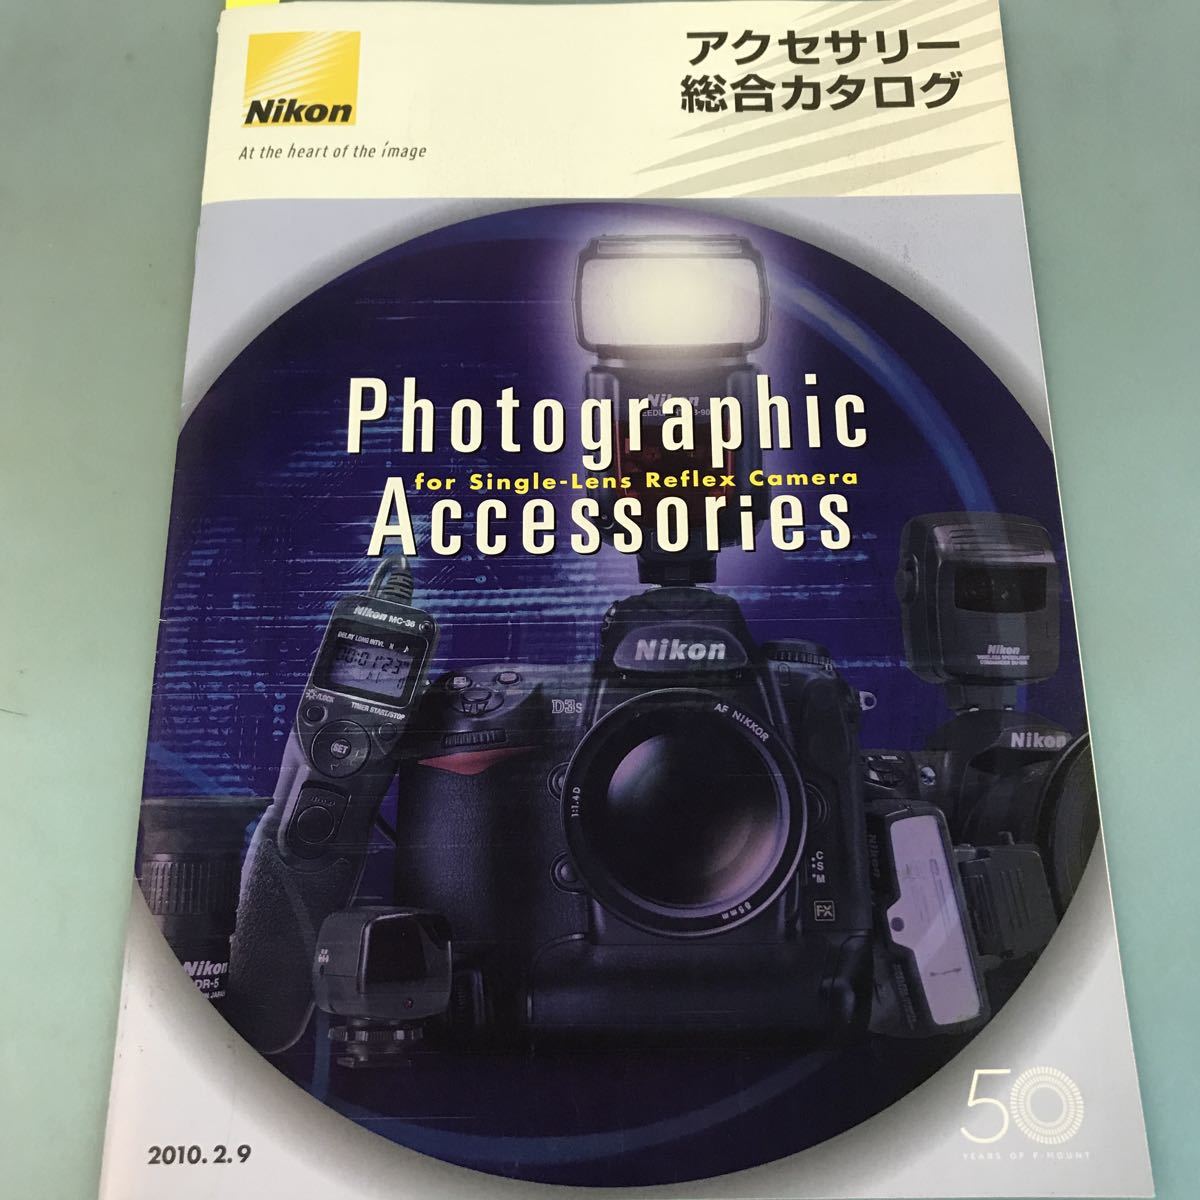 B12-025 Nikon accessory general catalogue Photographic Accessories 2010.2.9